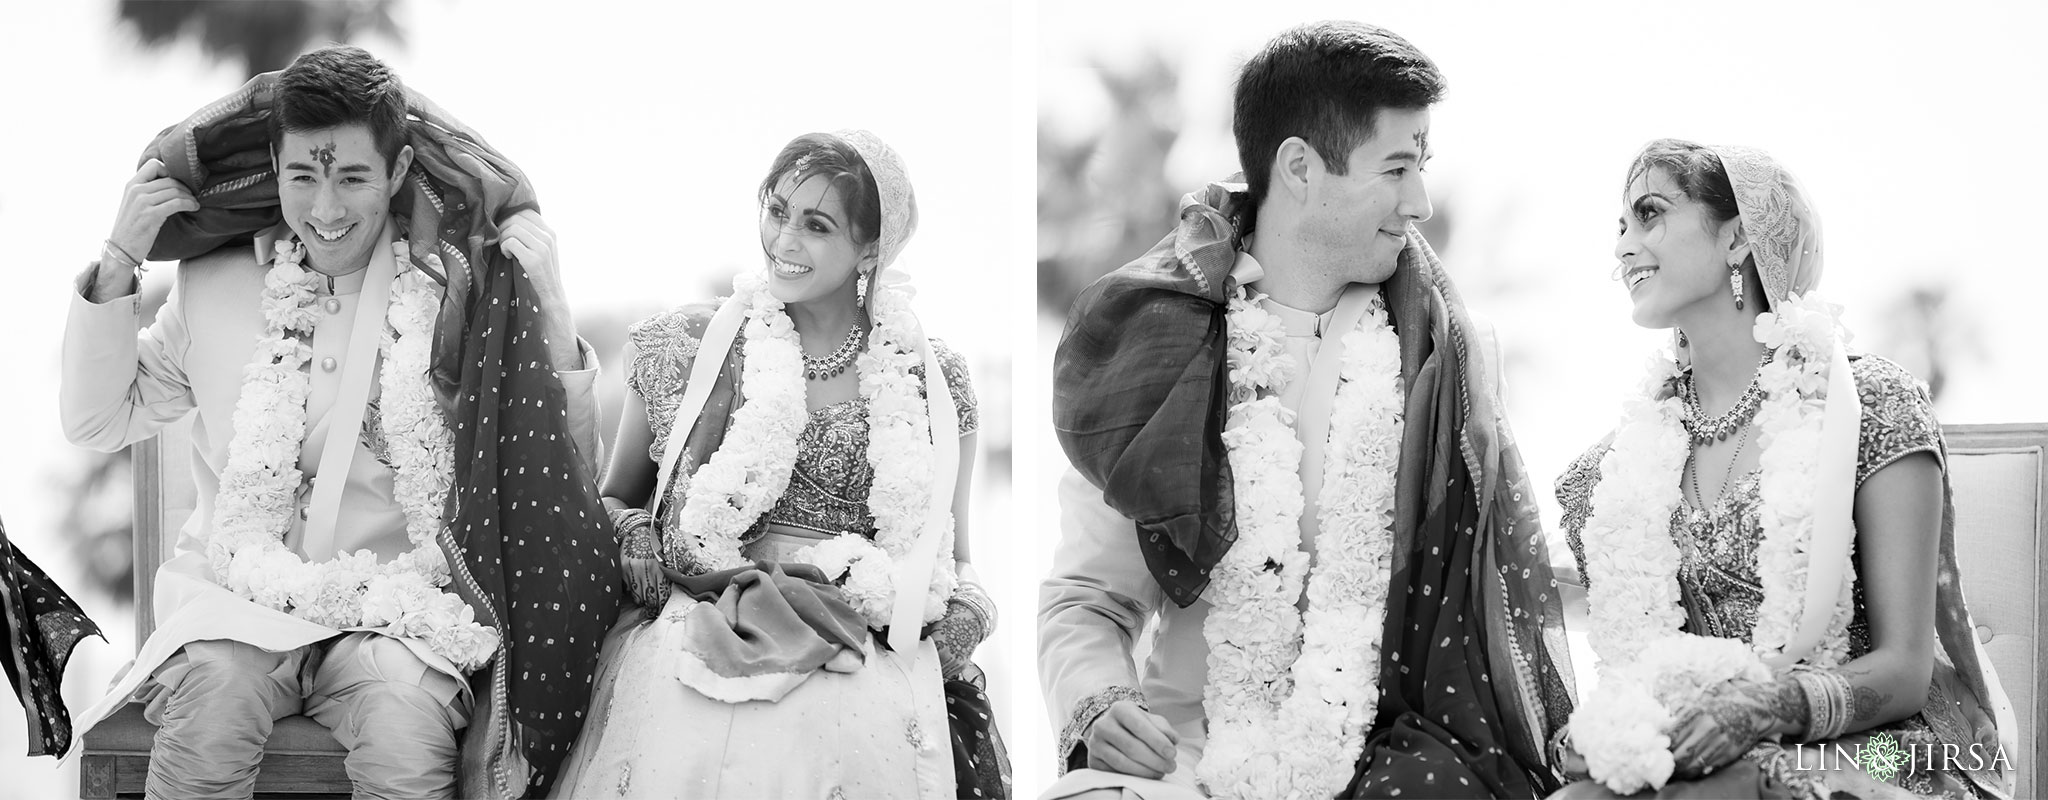 31 pasea hotel and spa huntington beach indian wedding ceremony photography